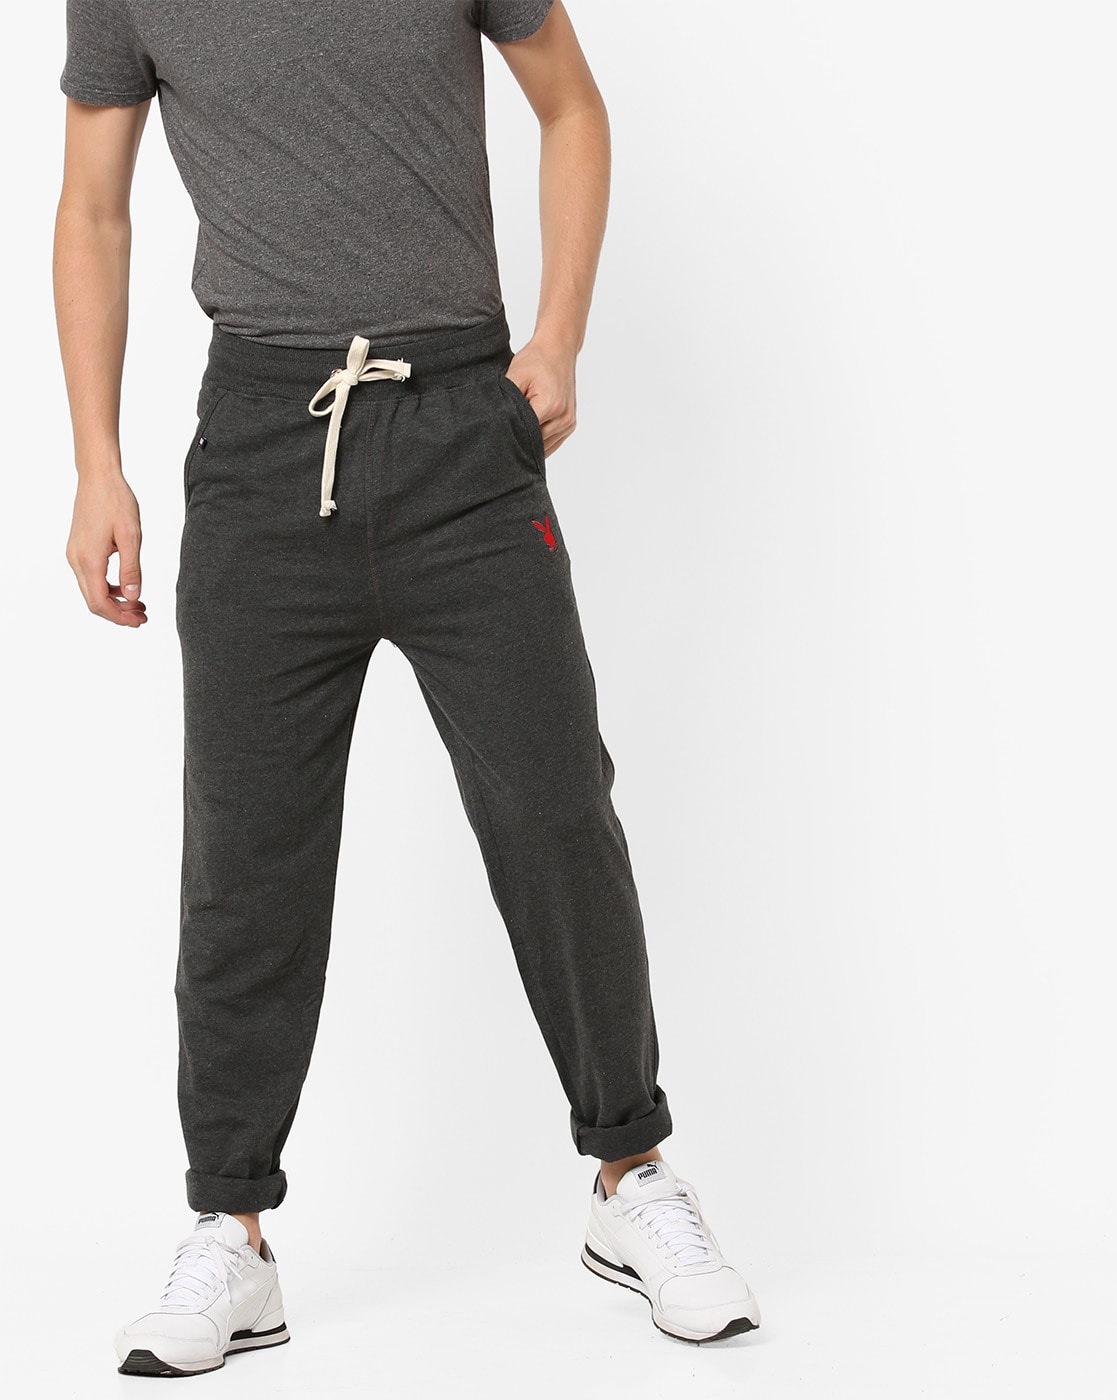 GNFJYYkz sweat pants male Printed Harem Pants Men Trousers Streetwear  Sweatpants Hip Hop Pants Mens Clothing Trousers Men Pants Size   XXXLarge  Buy Online at Best Price in KSA  Souq